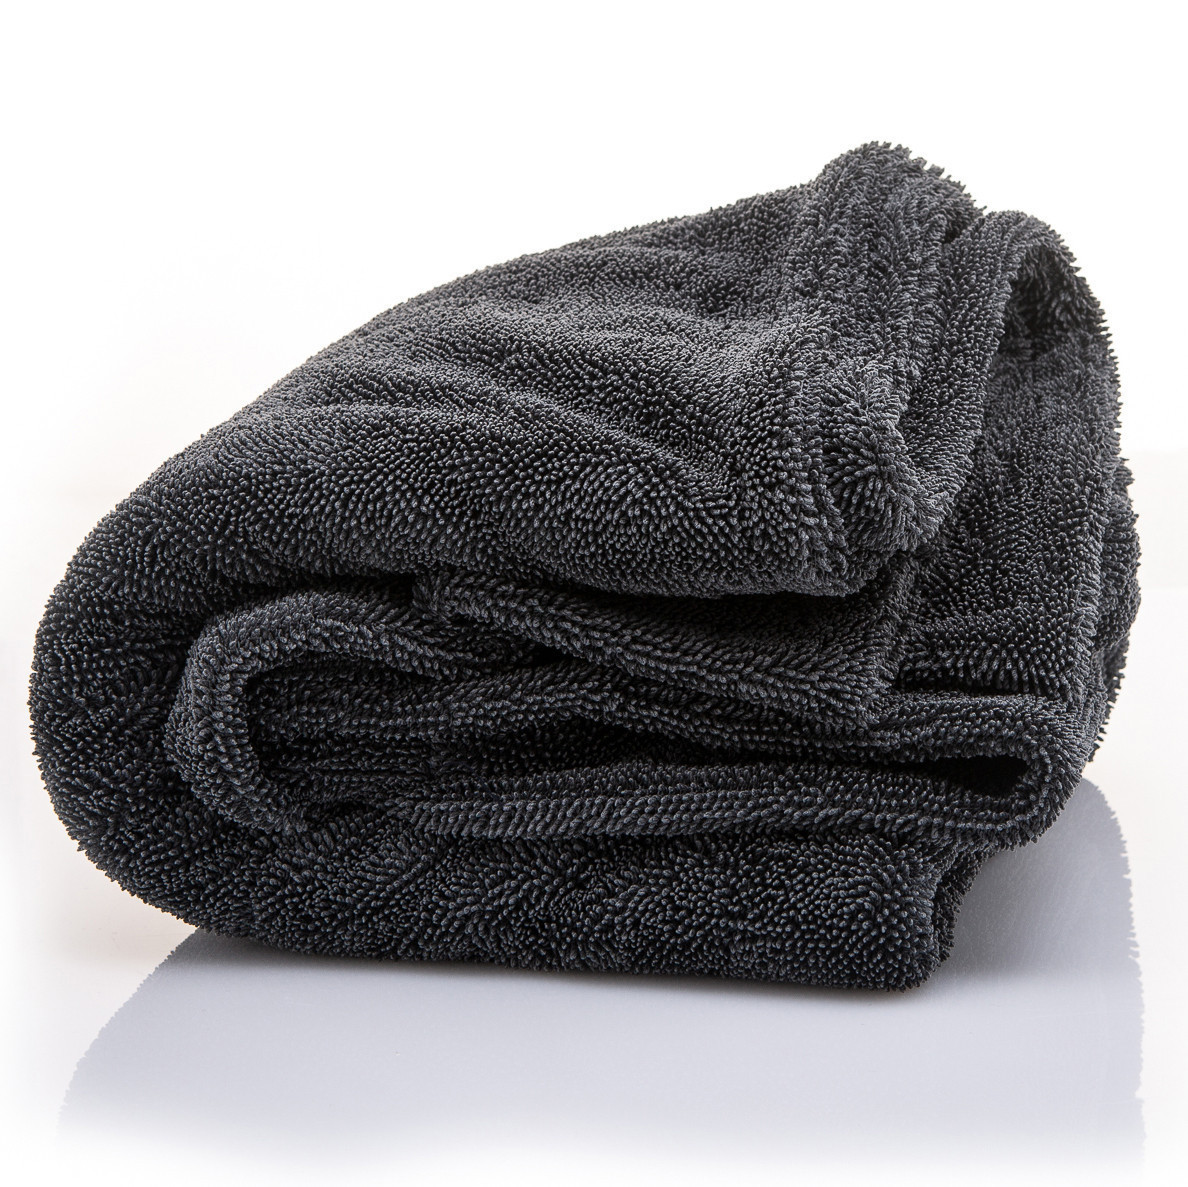 Work stuff king towel - najchłonniejszy ręcznik 73x90